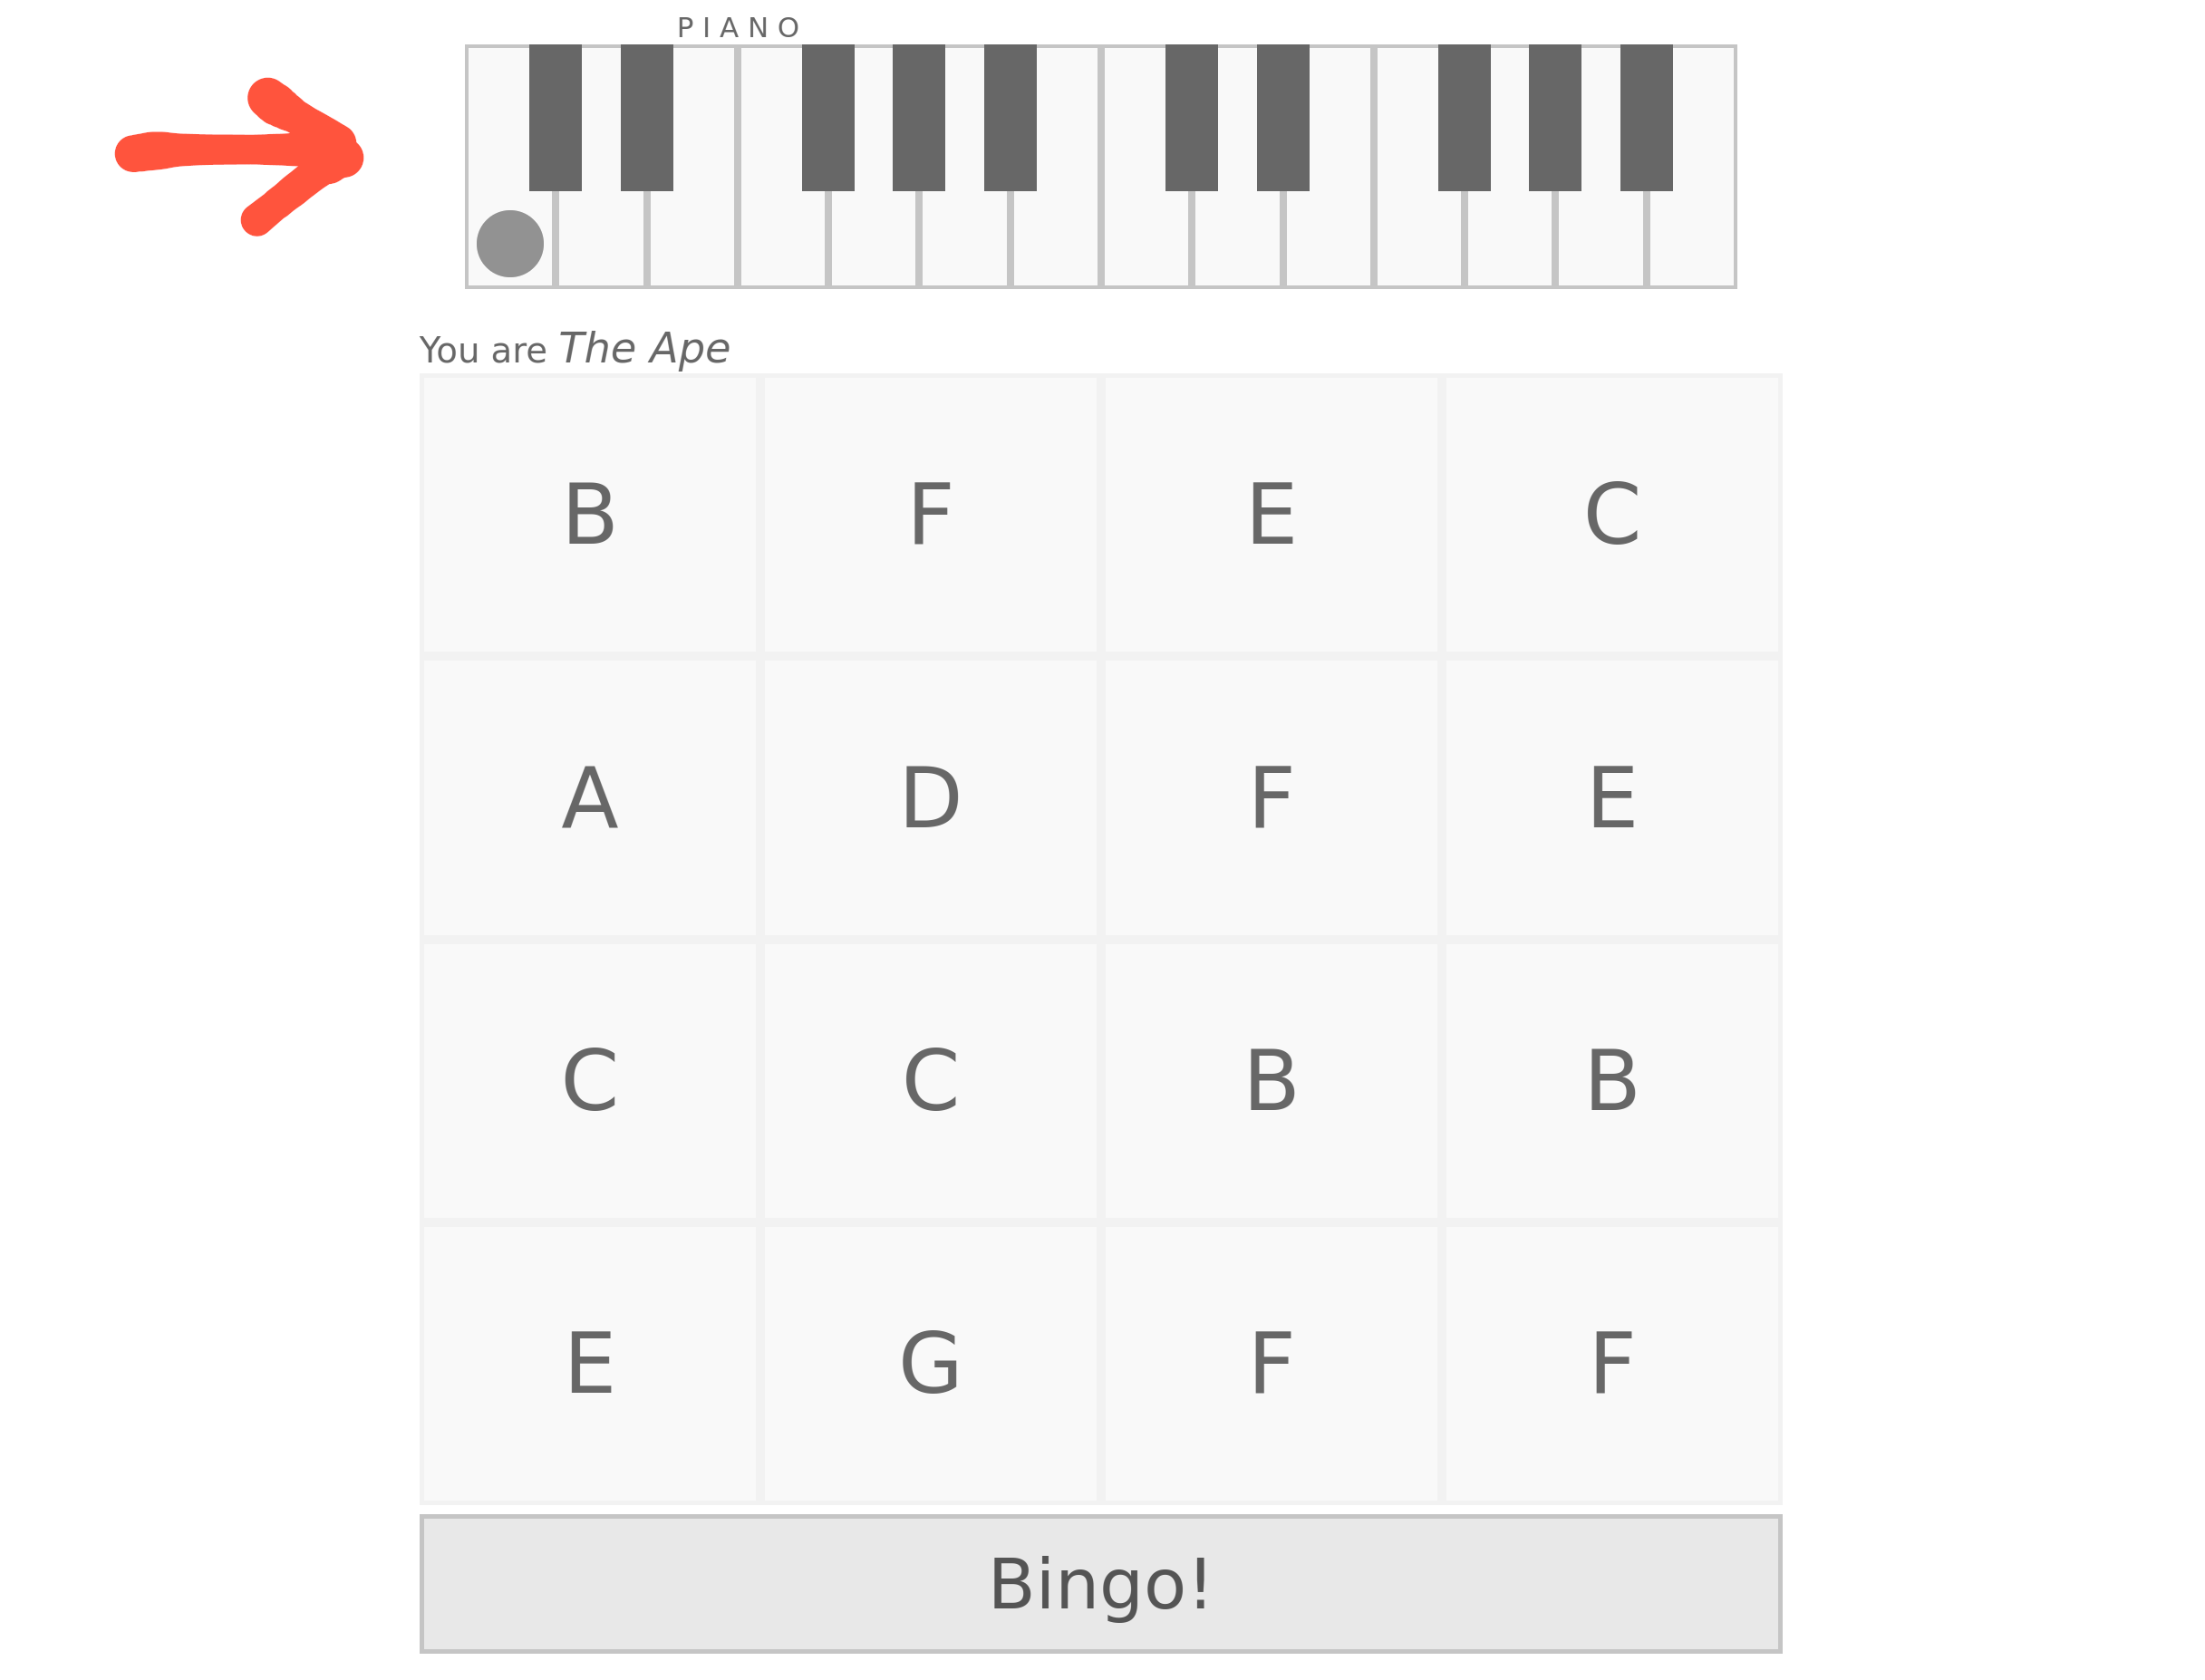 Bingo with piano